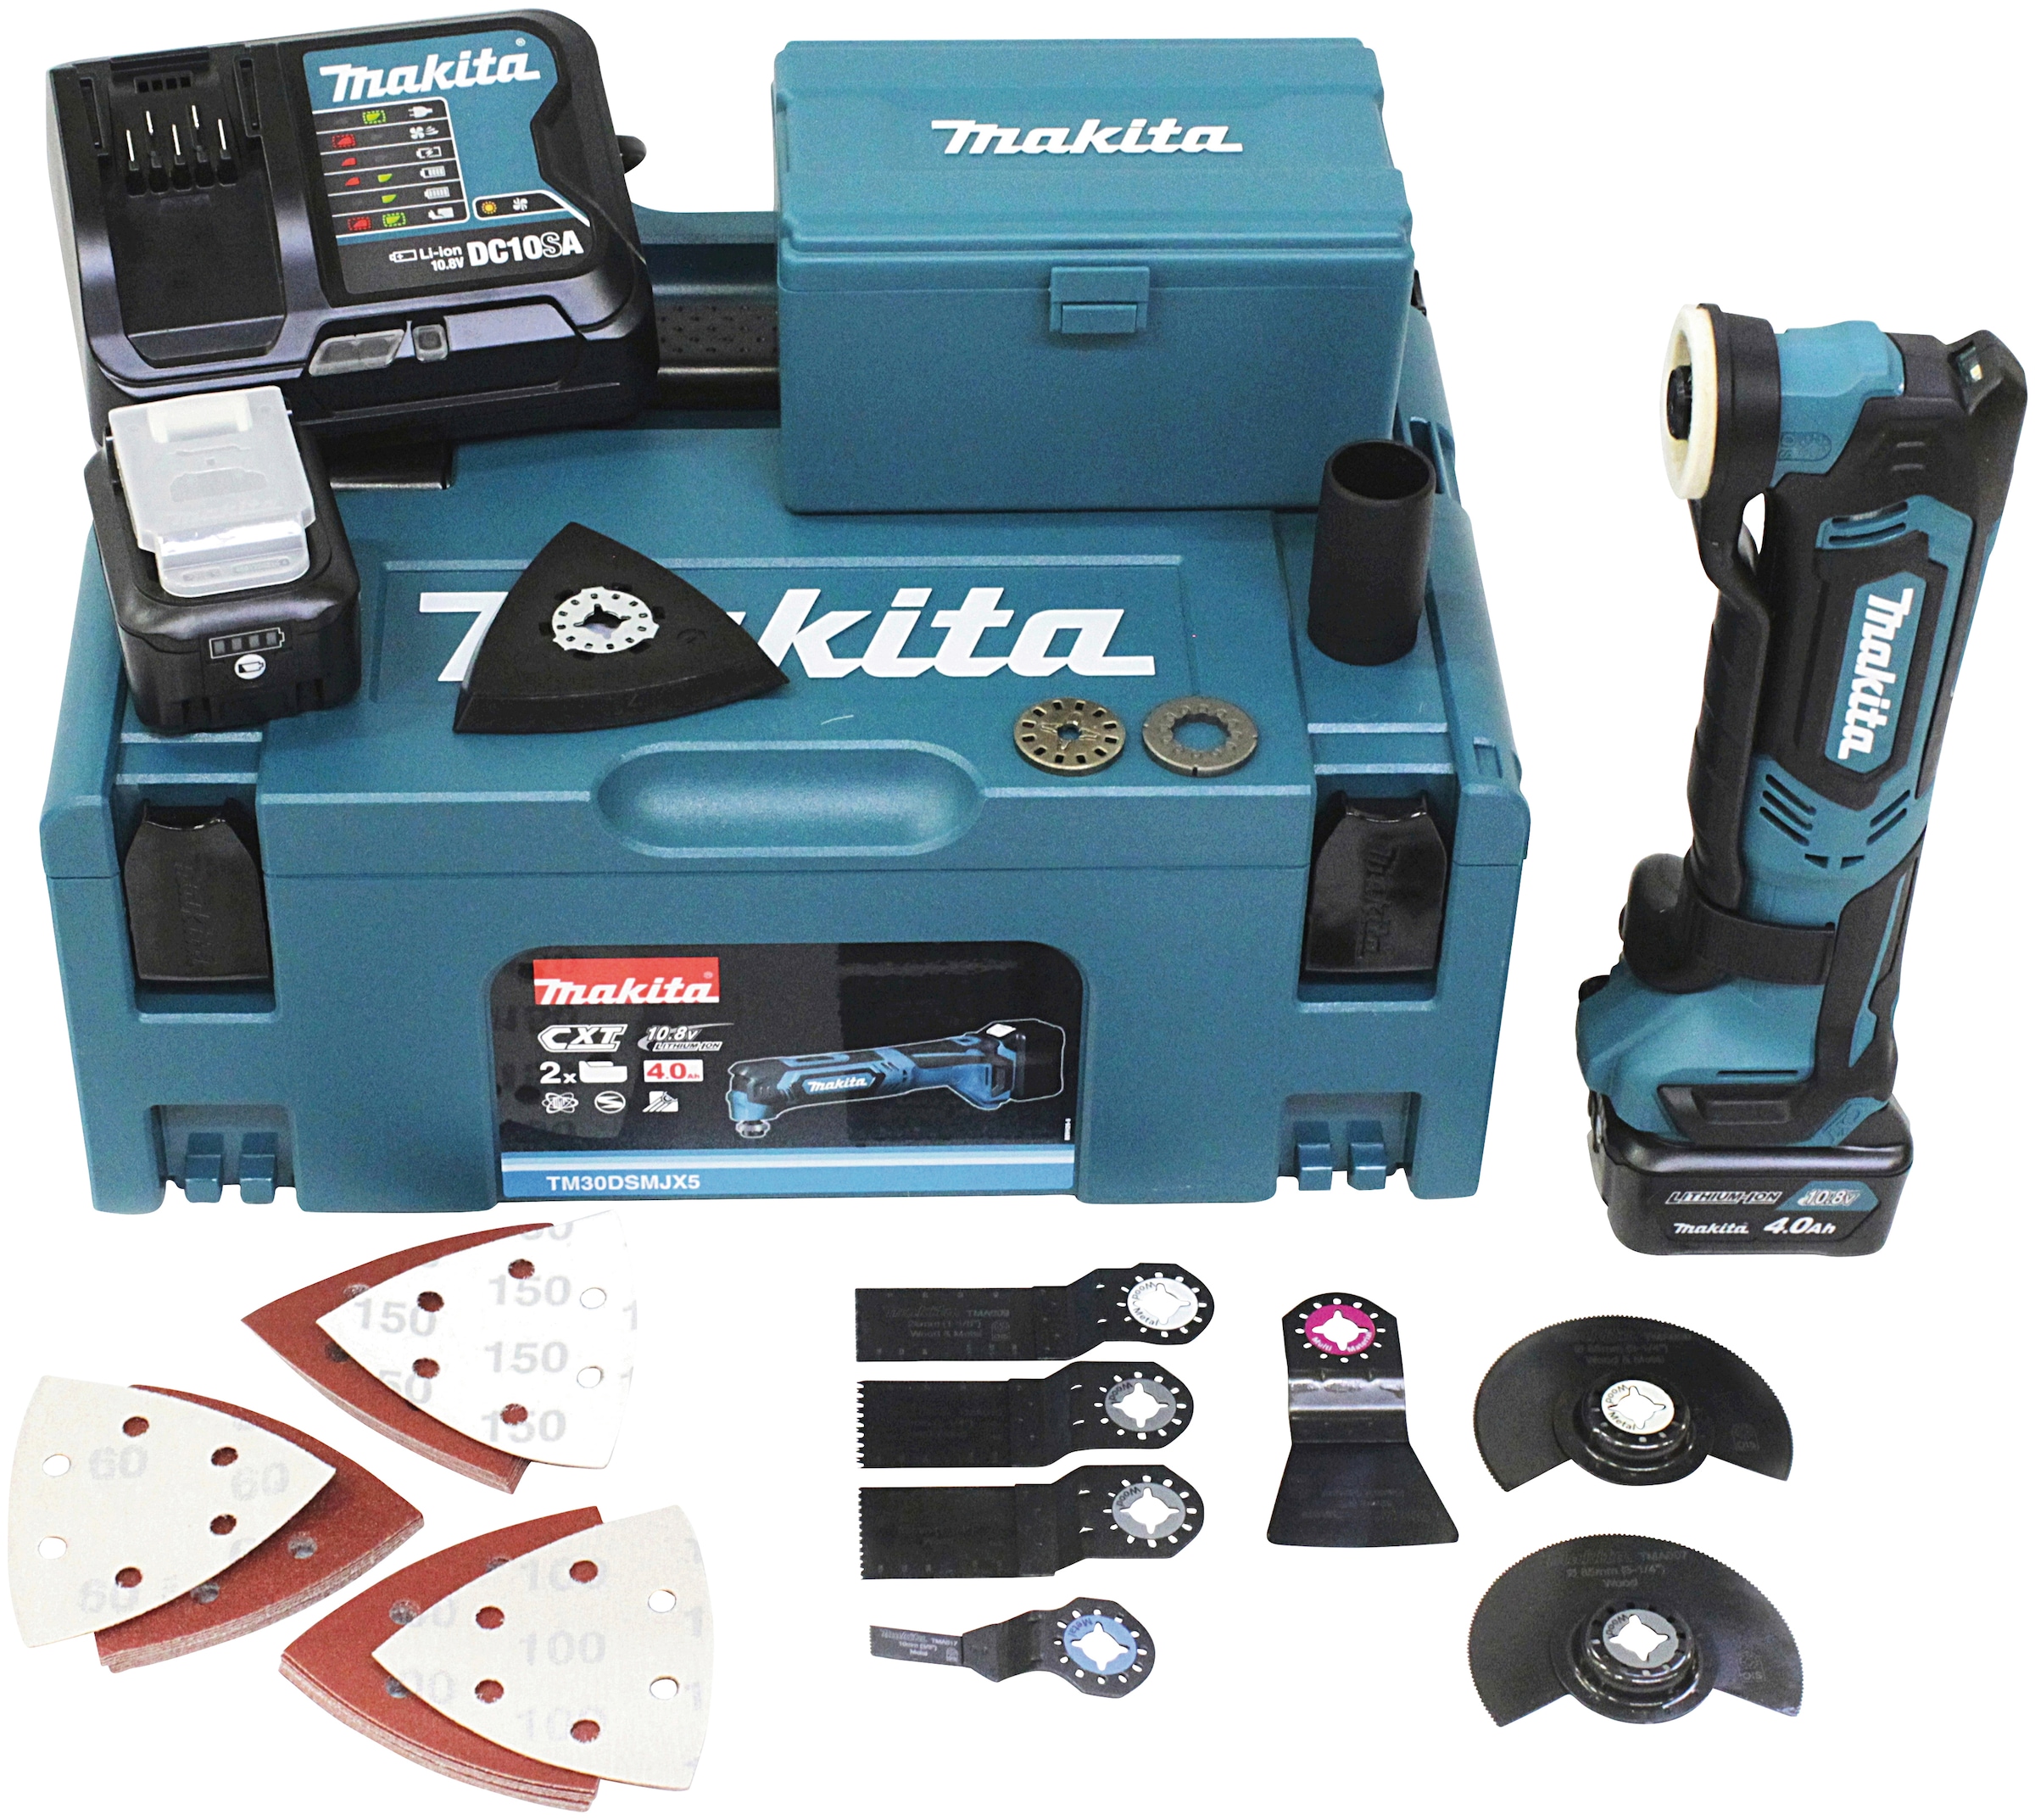 Makita Akku-Multifunktionswerkzeug »TM30DSMJX5«, mit 2 Akkus 12V/4 Ah und  Ladegerät online kaufen